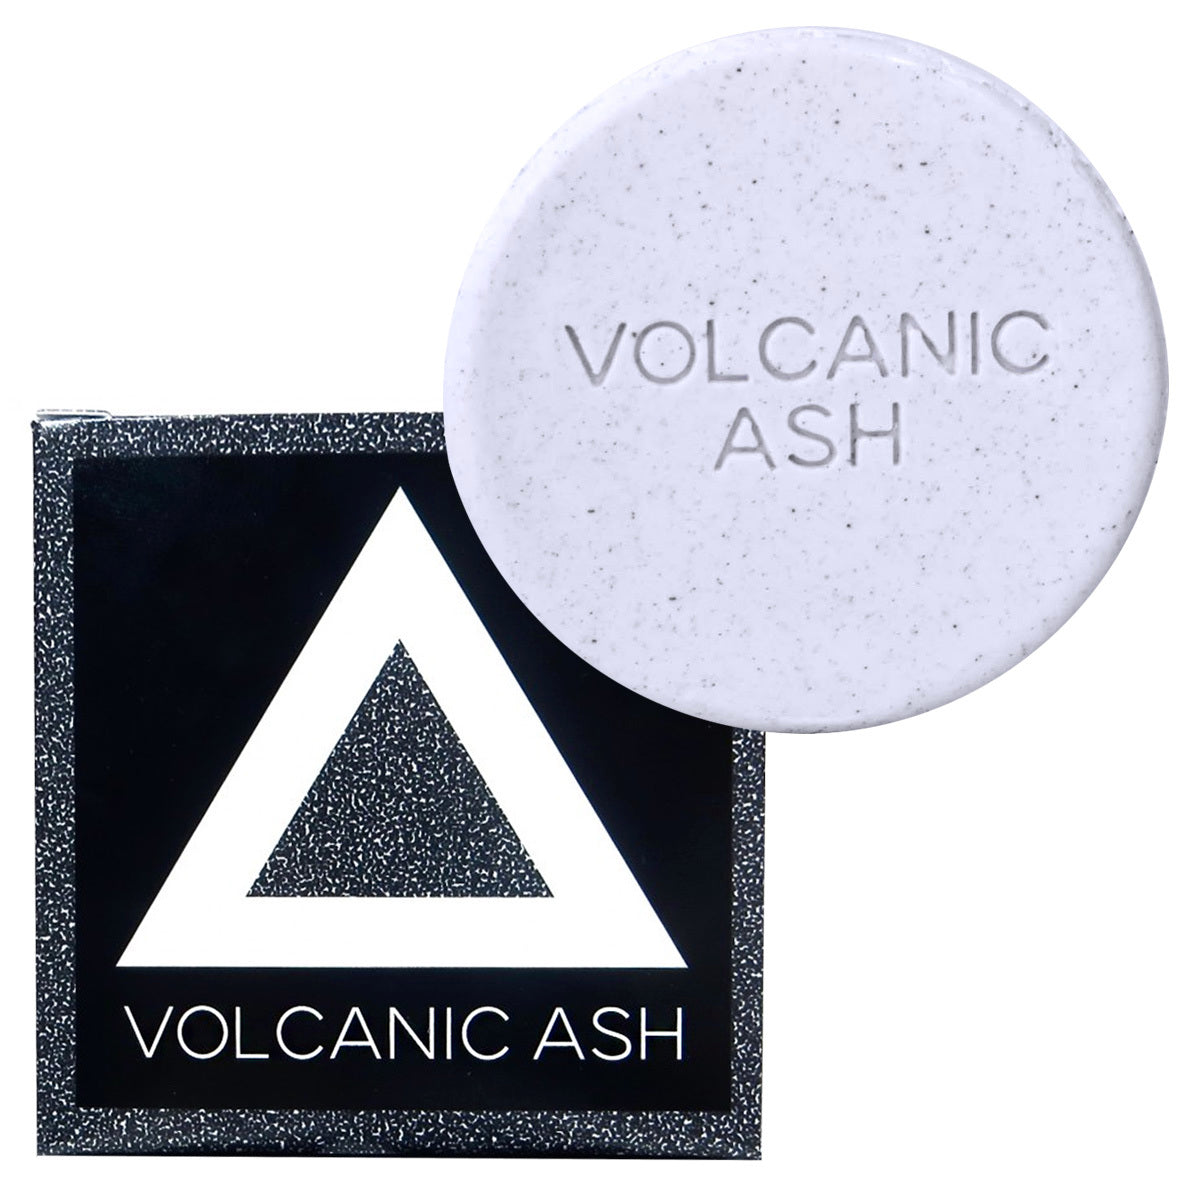 Primary image of Hallo Sapa - Volcanic Ash Soap